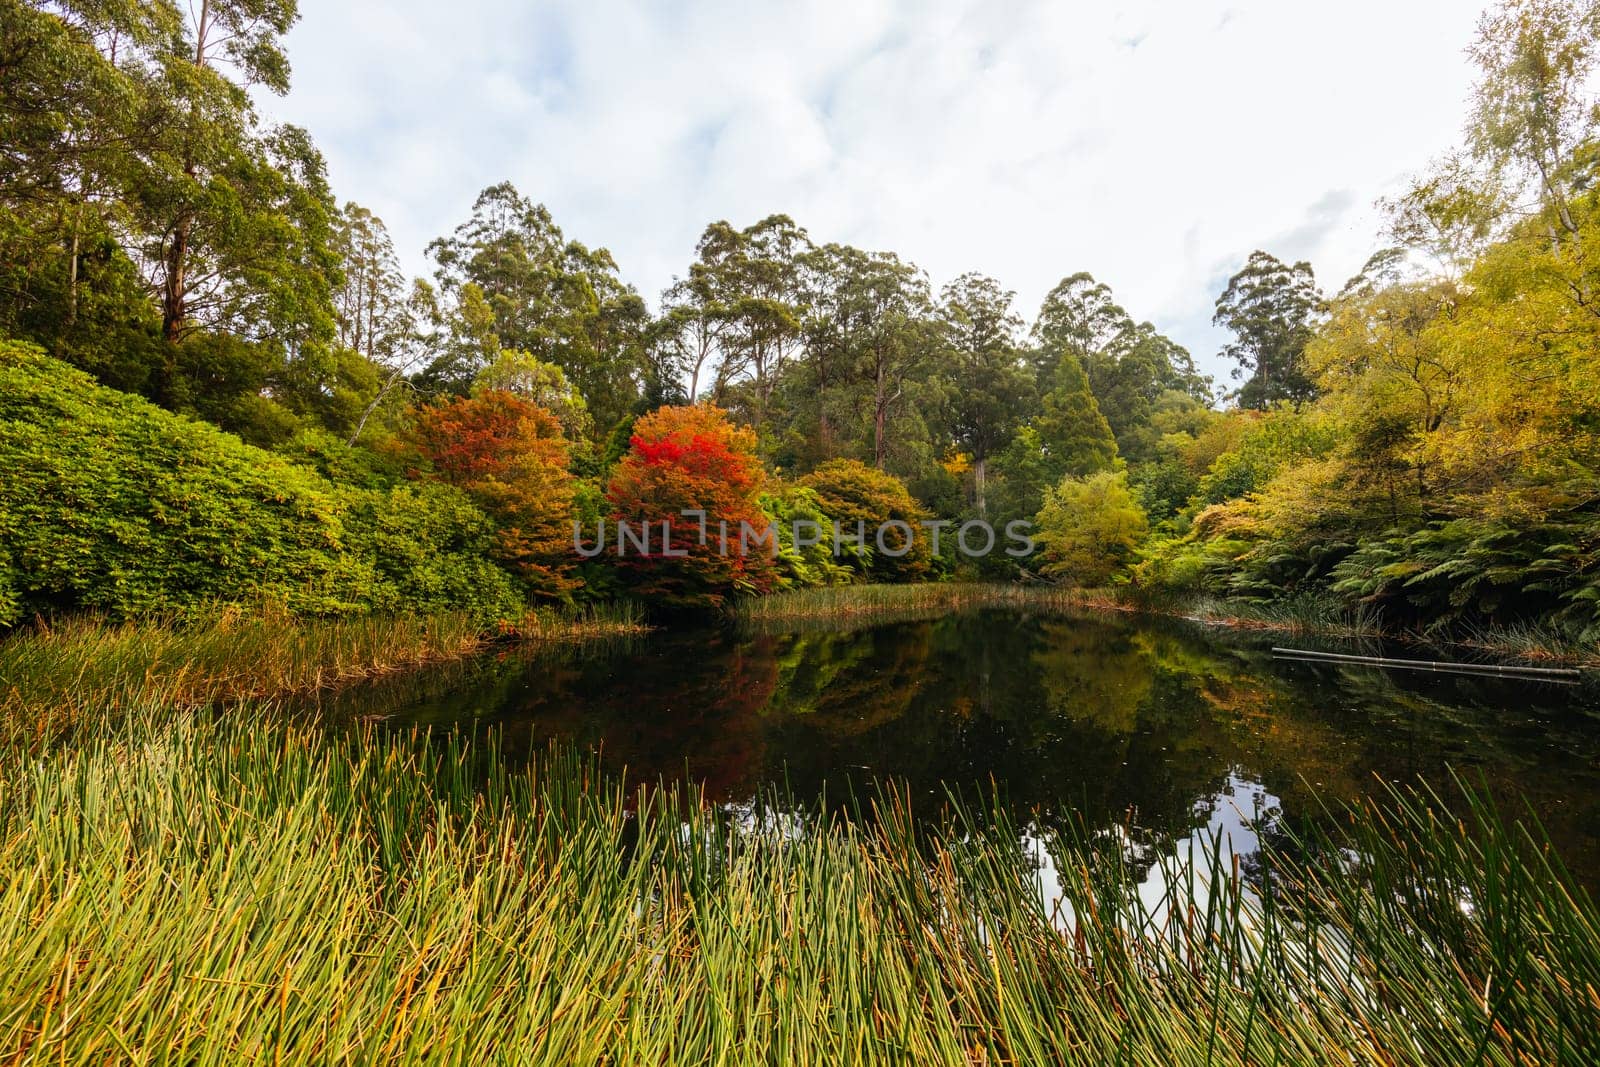 Dandenong Ranges Botanic Garden in Olinda Australia by FiledIMAGE